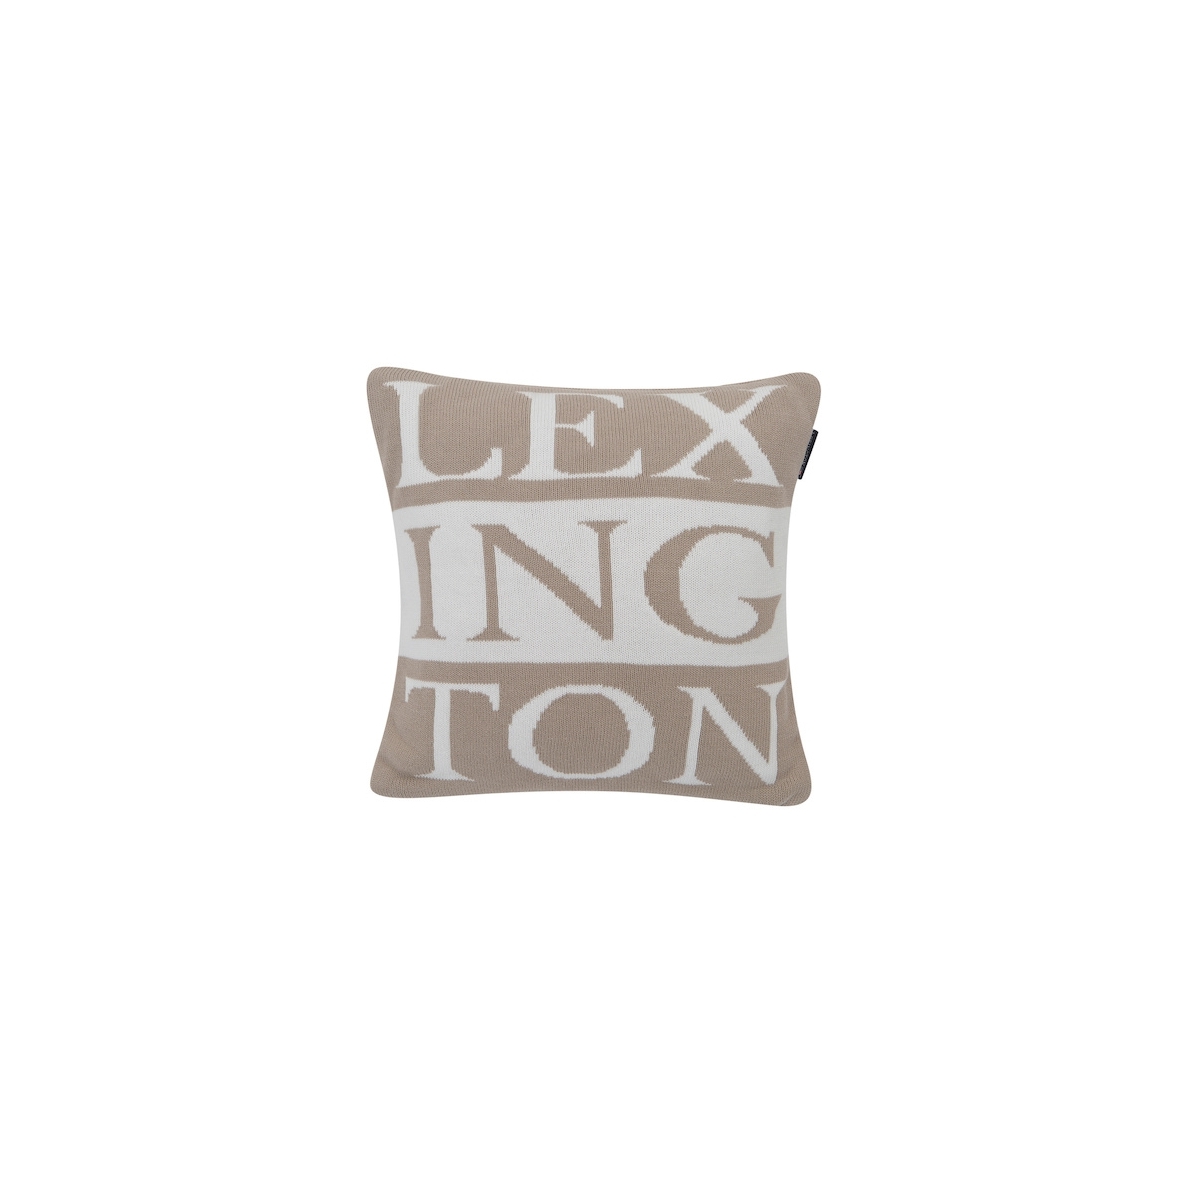 Funda de Coixi Lexington Logo Punt Blau Marí